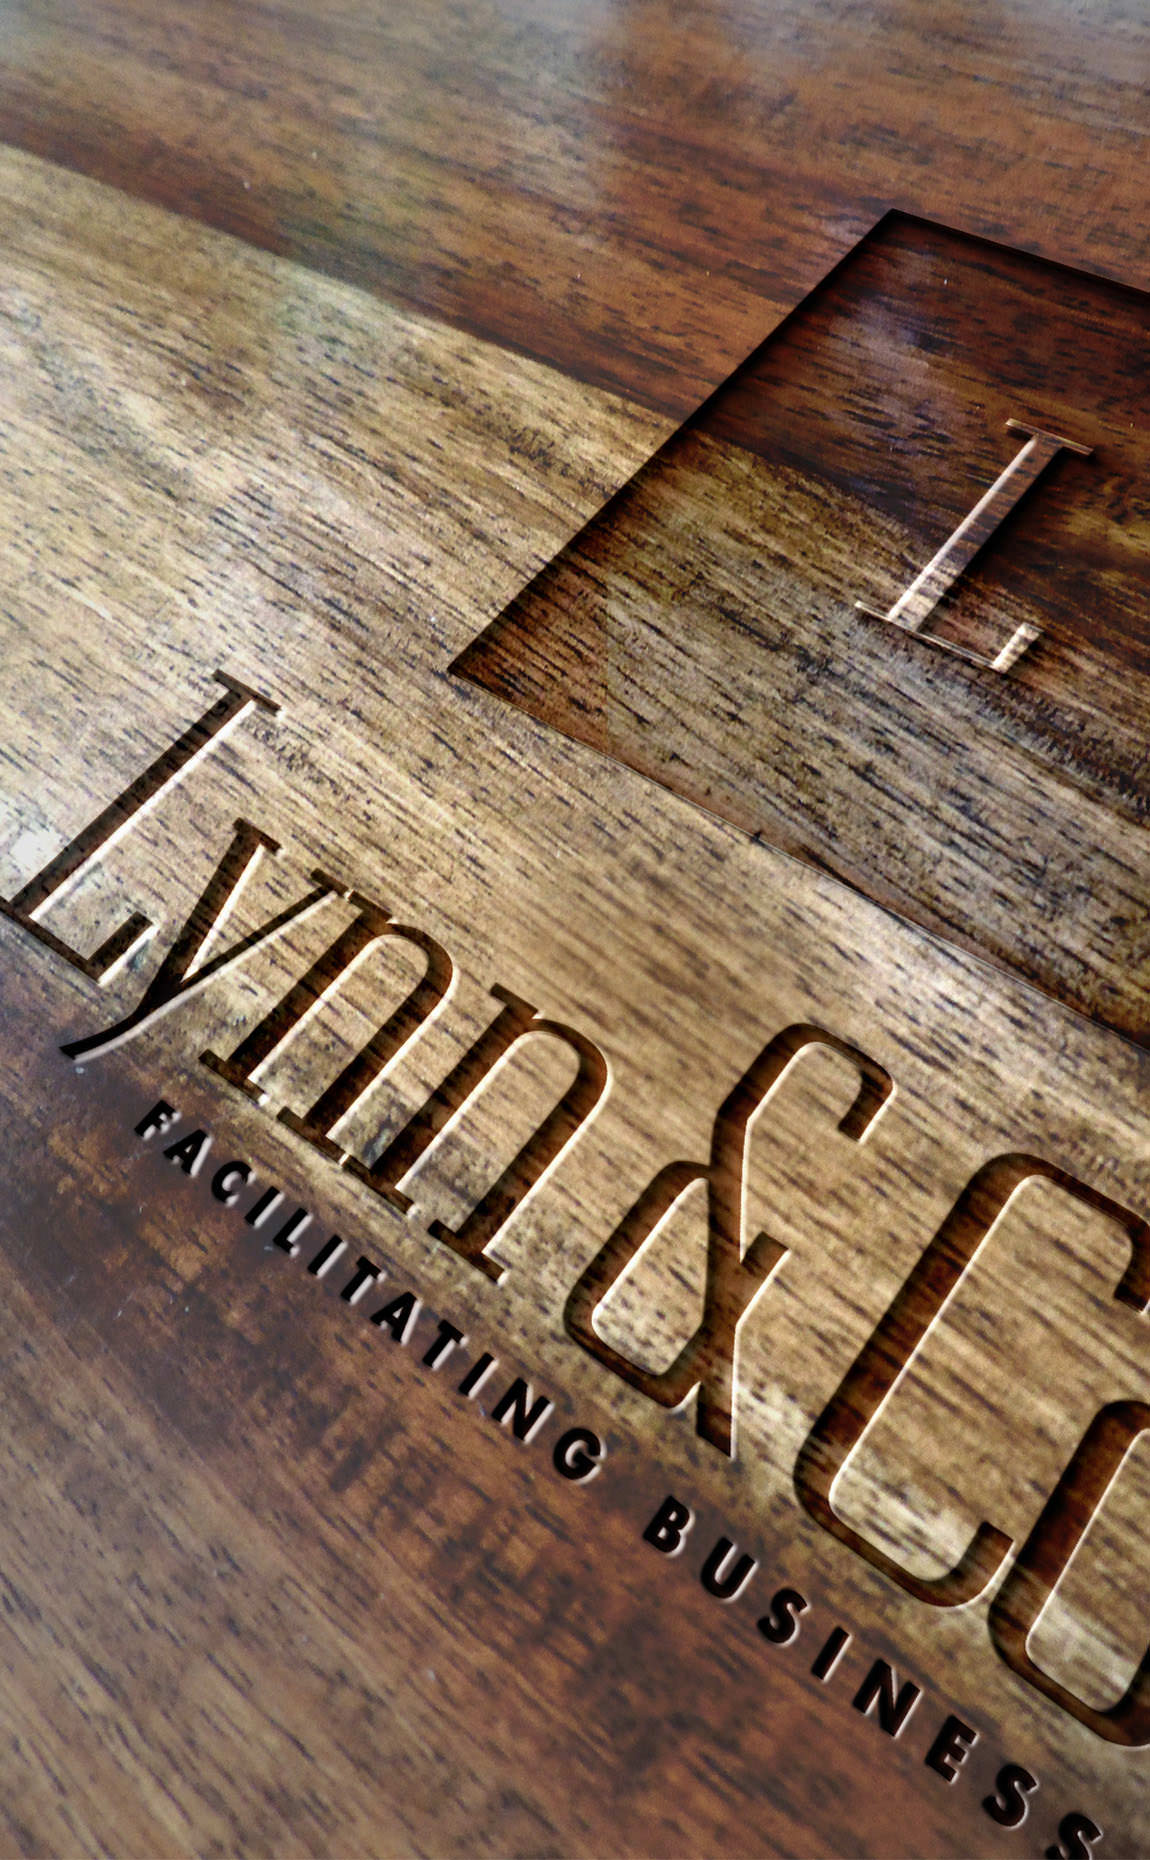 Lynn&Co™ We make business successful.